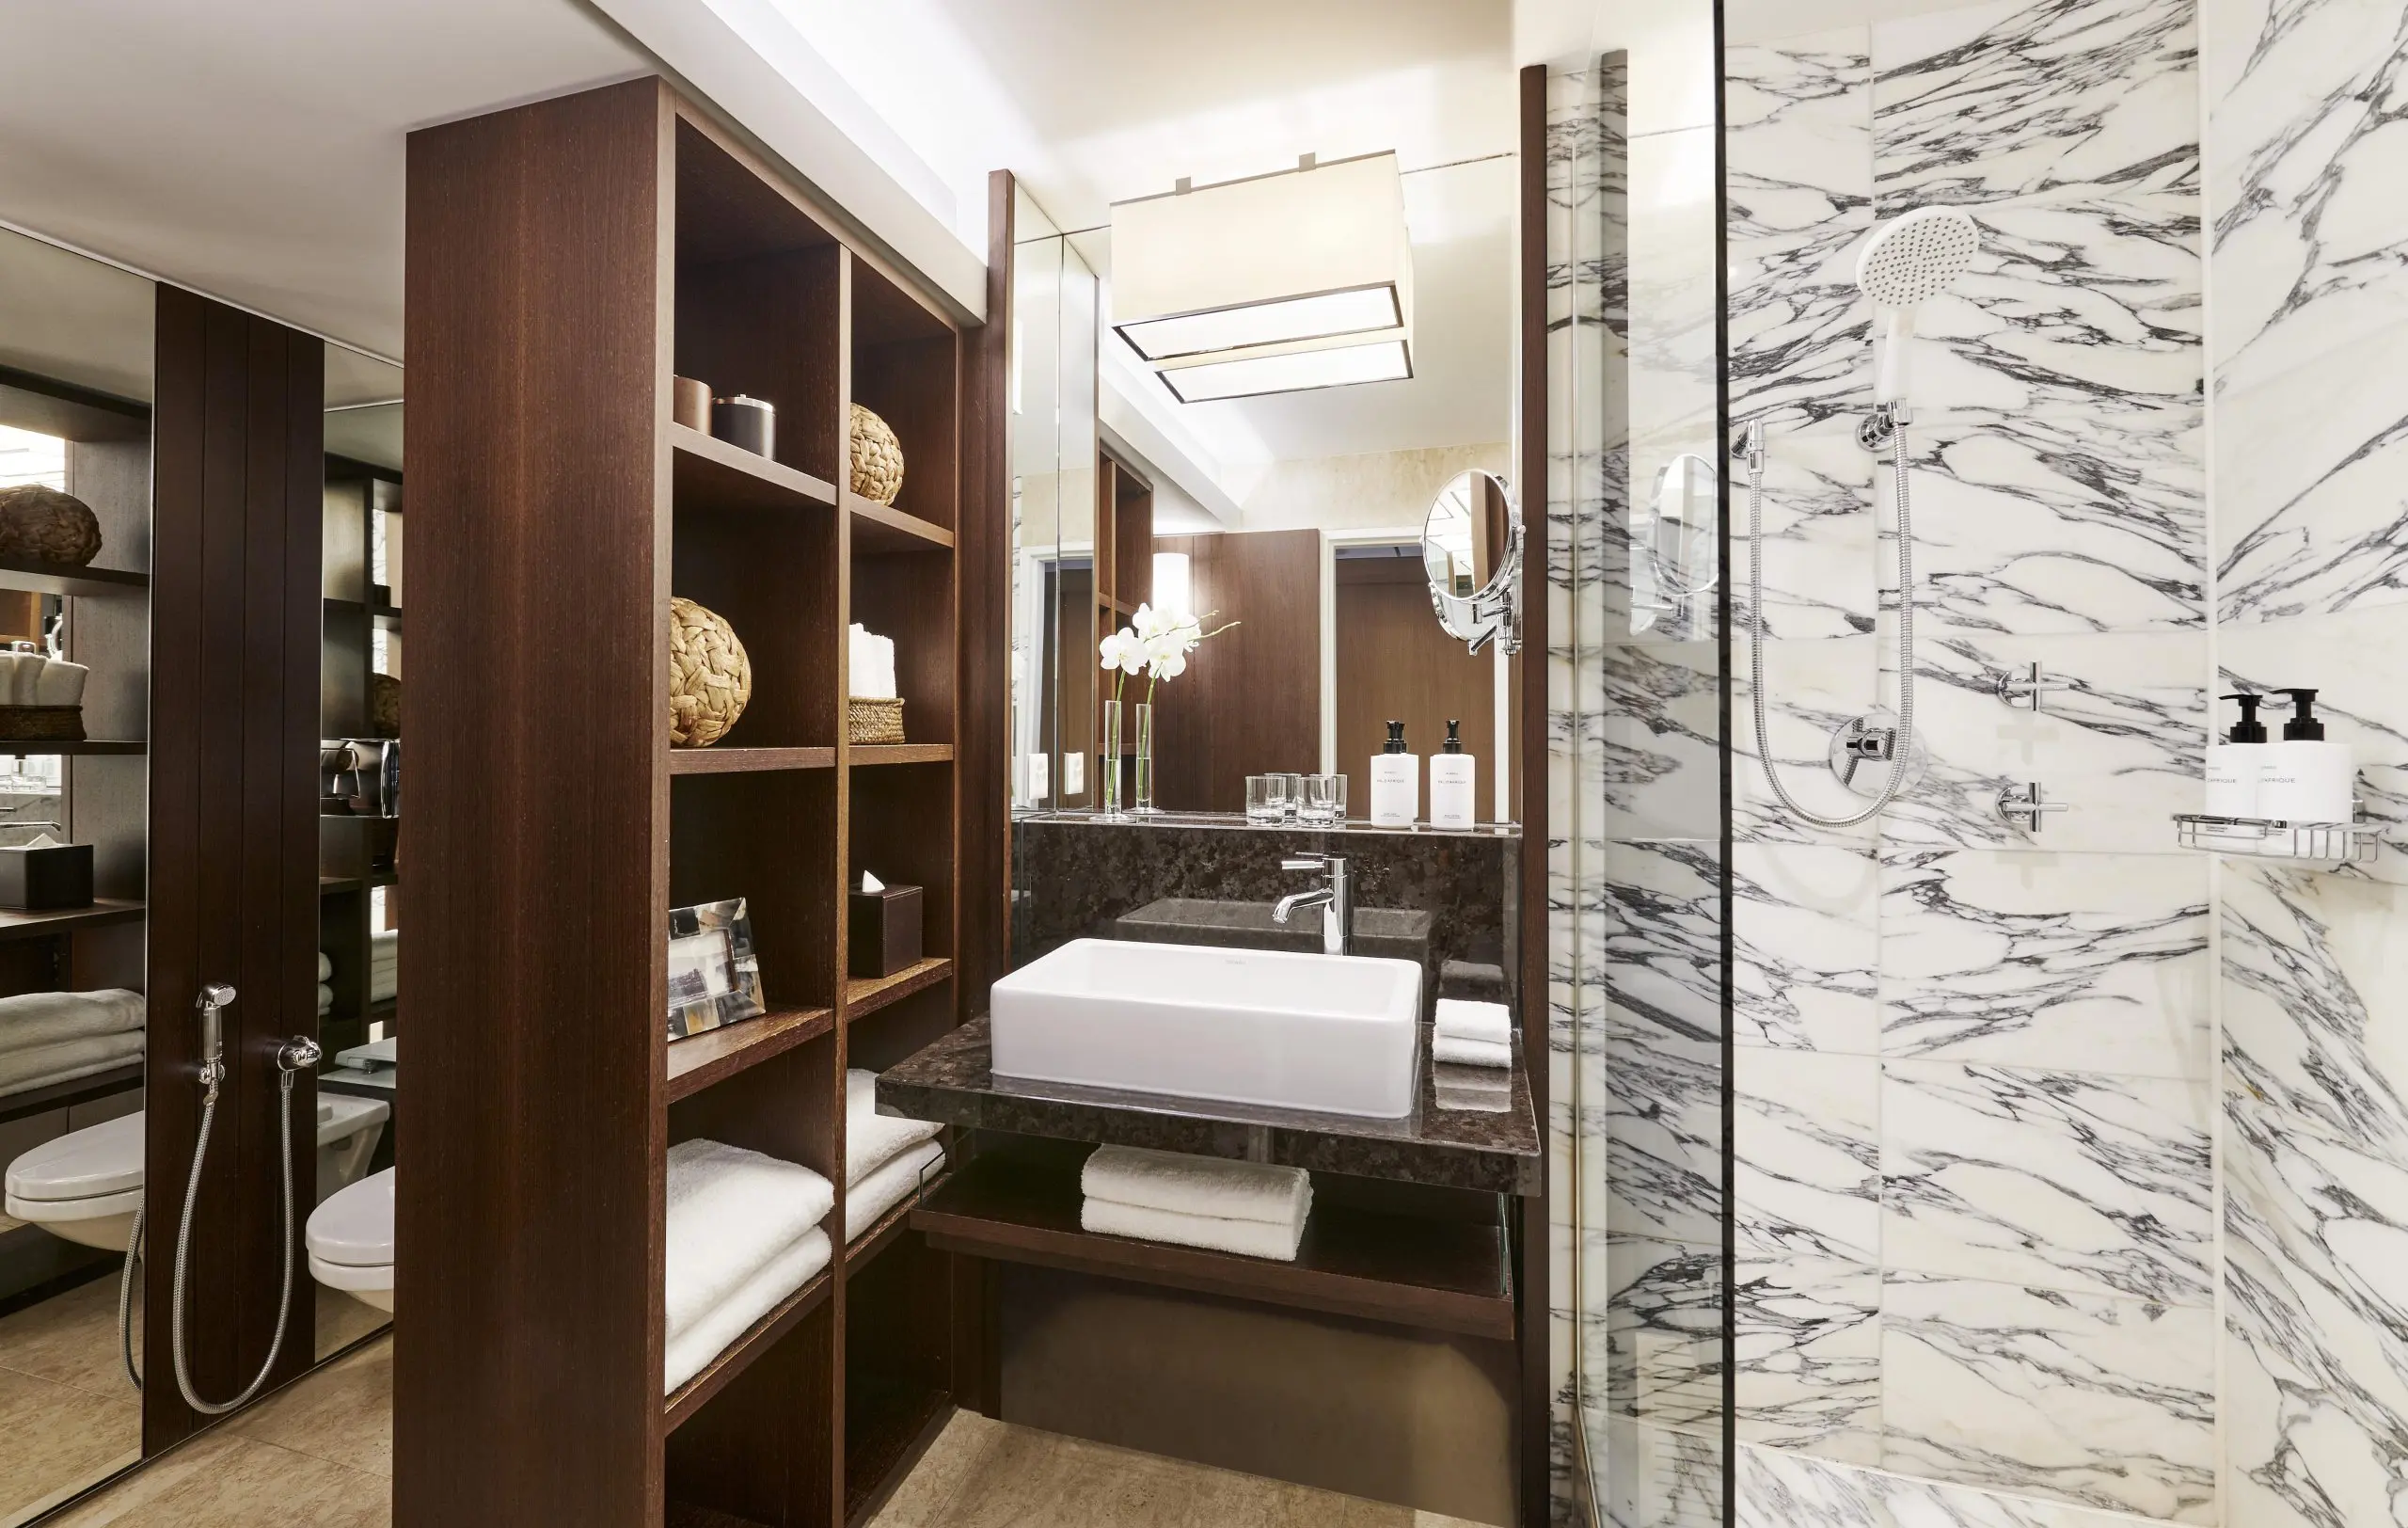 InterContinental-Geneve-Premium-Room-bathroom-9-10-11eme-floor-min-scaled (1)